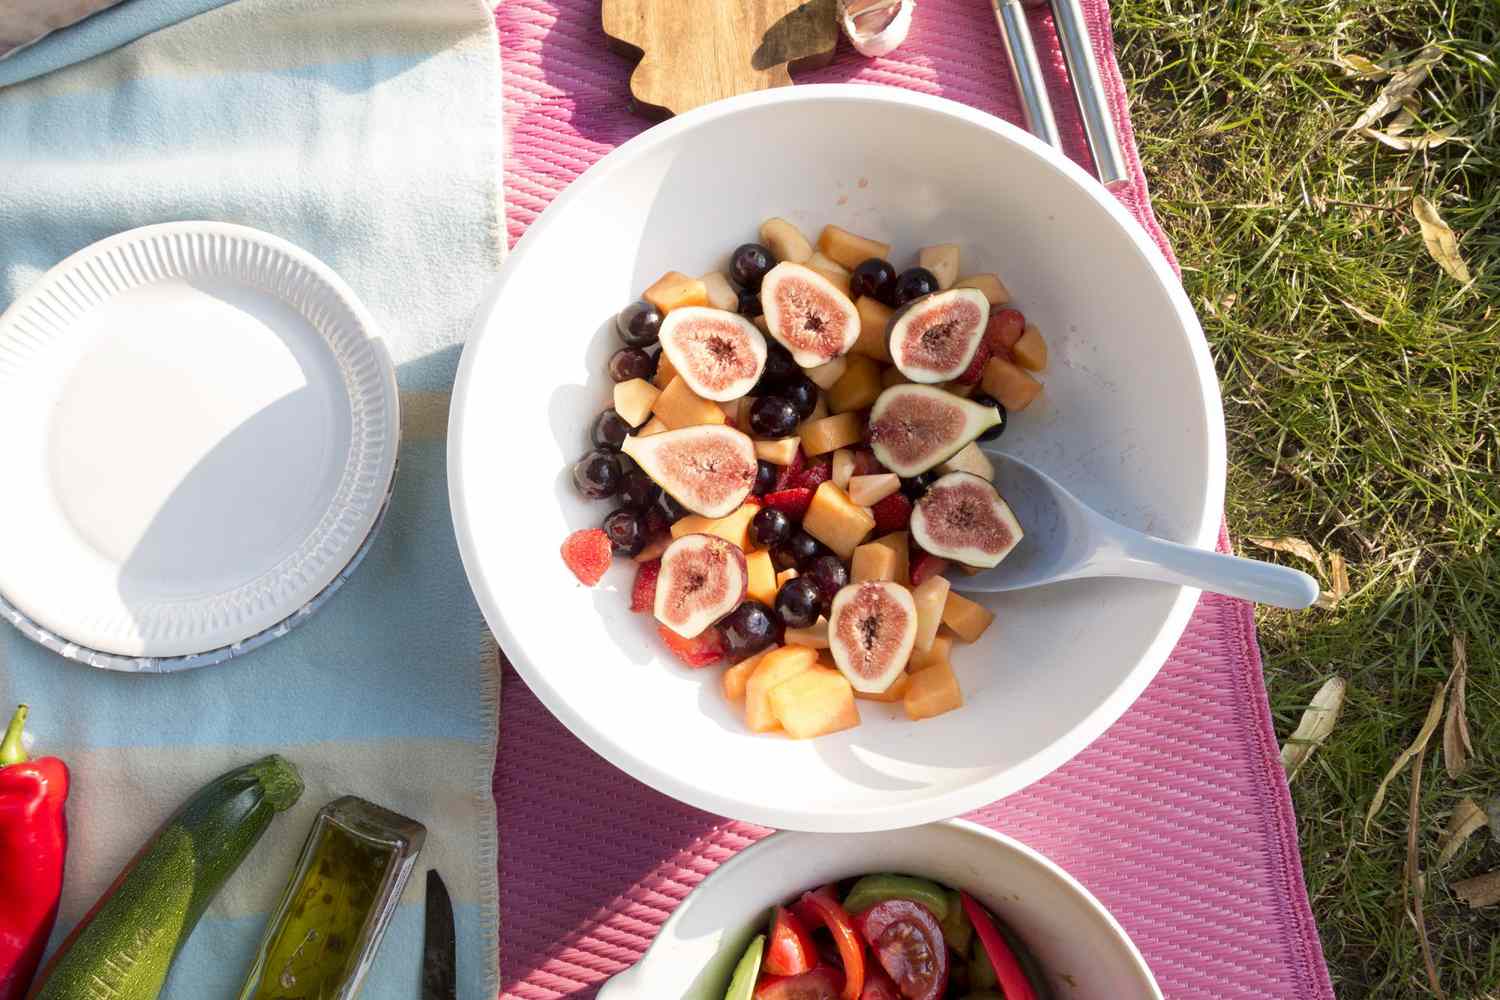 picnic-menu-ideas: fruit salad